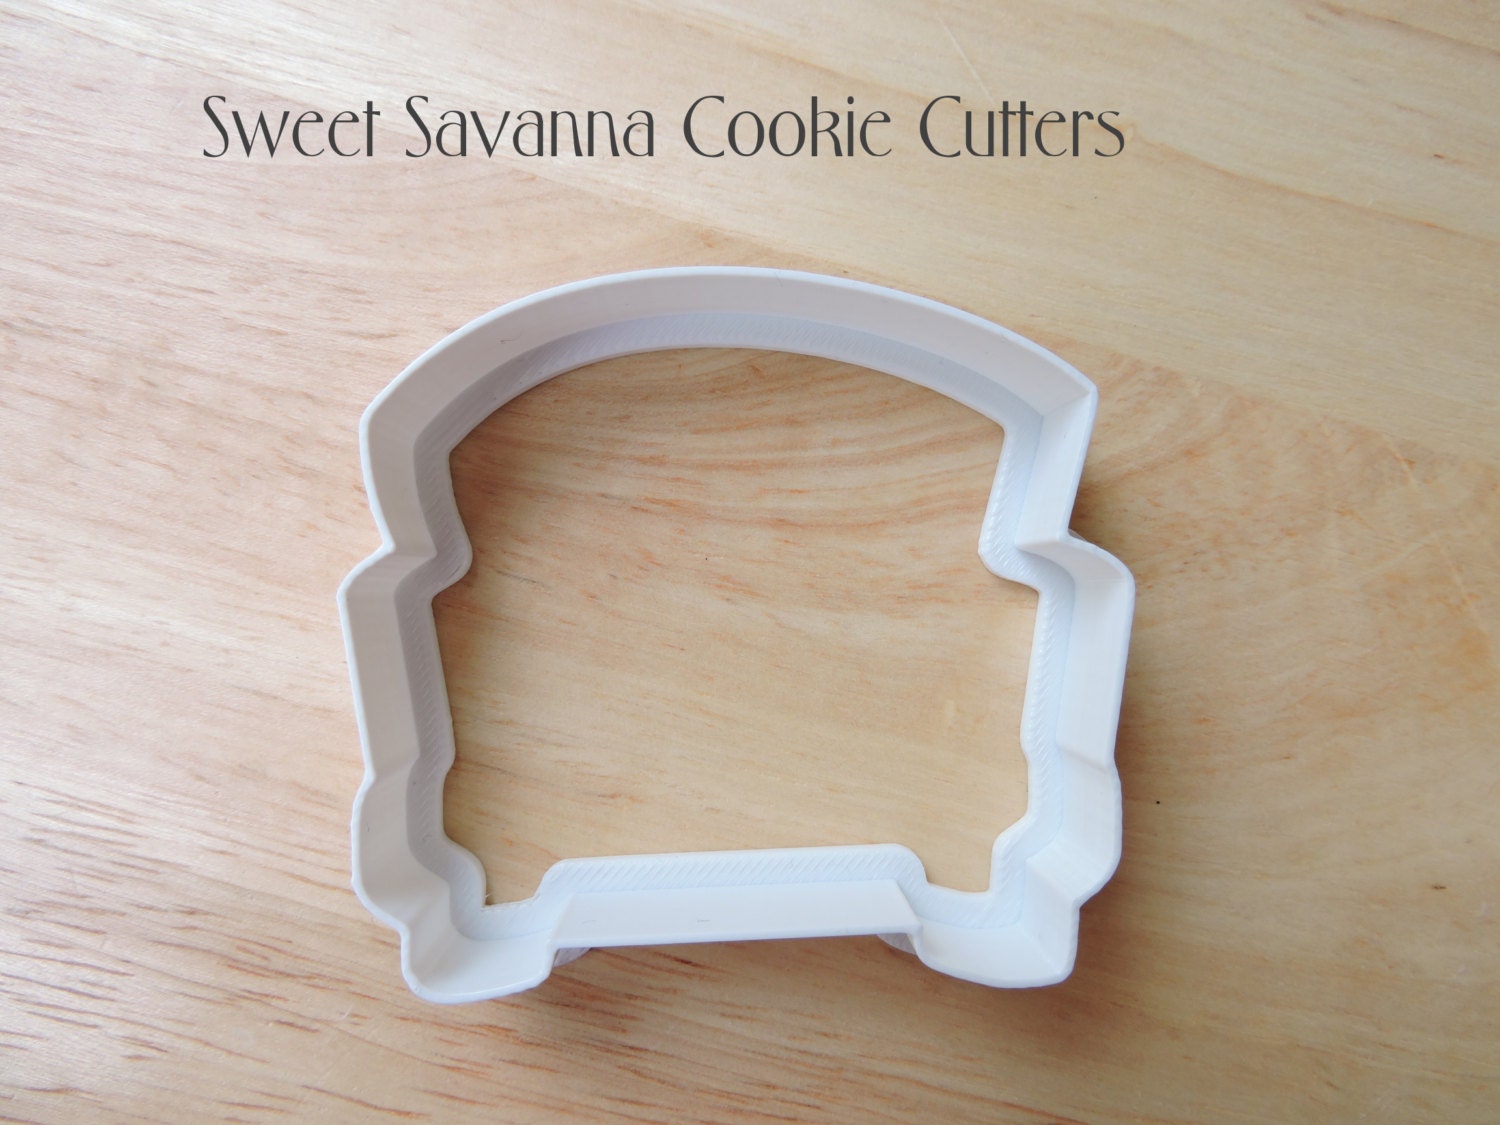 Car Cookie Cutter, Fondant cutters, Just Married Cookie Cutter, Weddin –  Makecookies